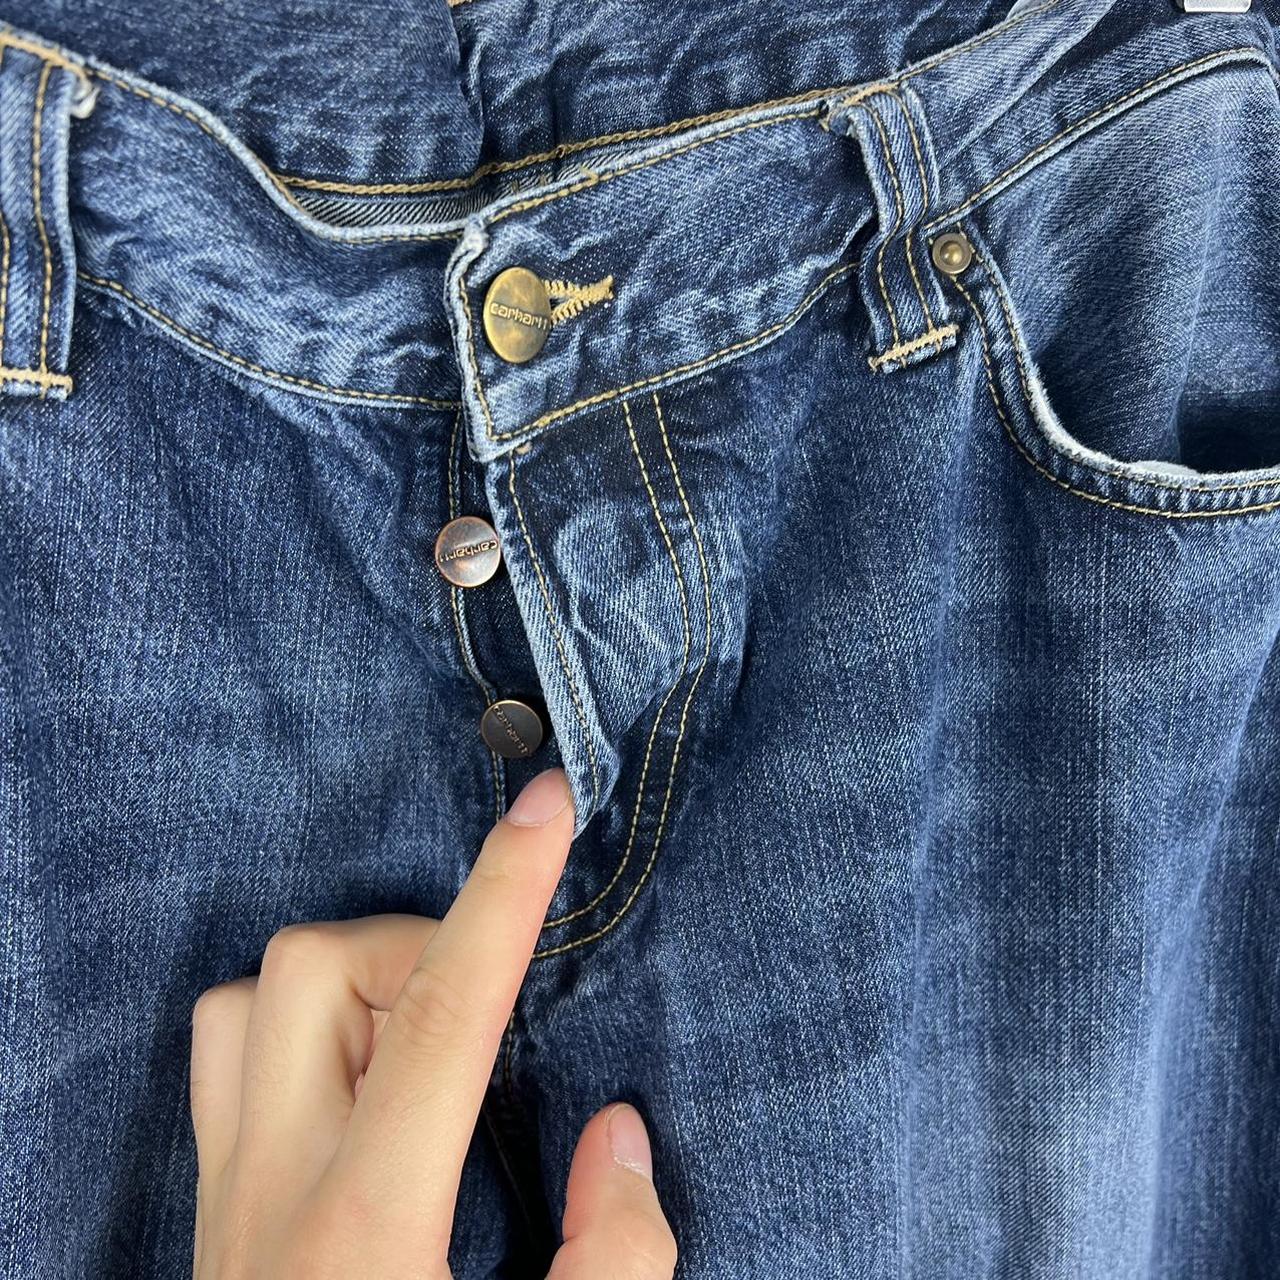 Carhartt jeans 33x34